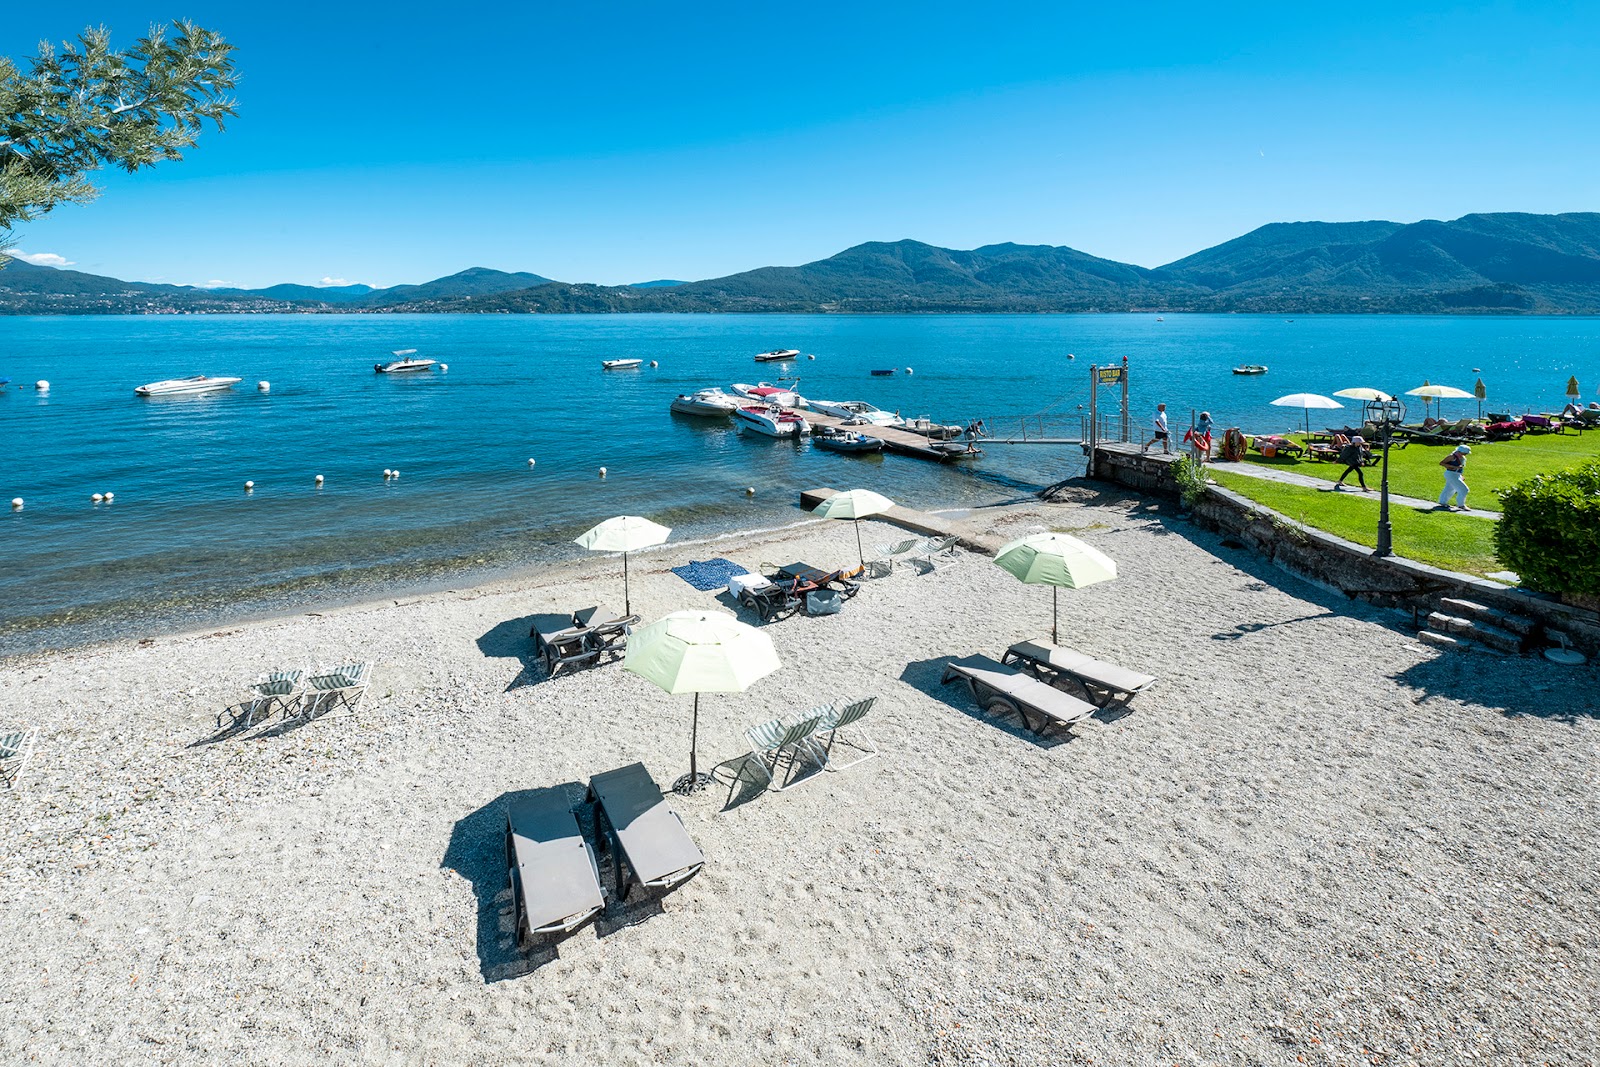 Foto av Spiaggia di Casa e Vela med grå fin sten yta